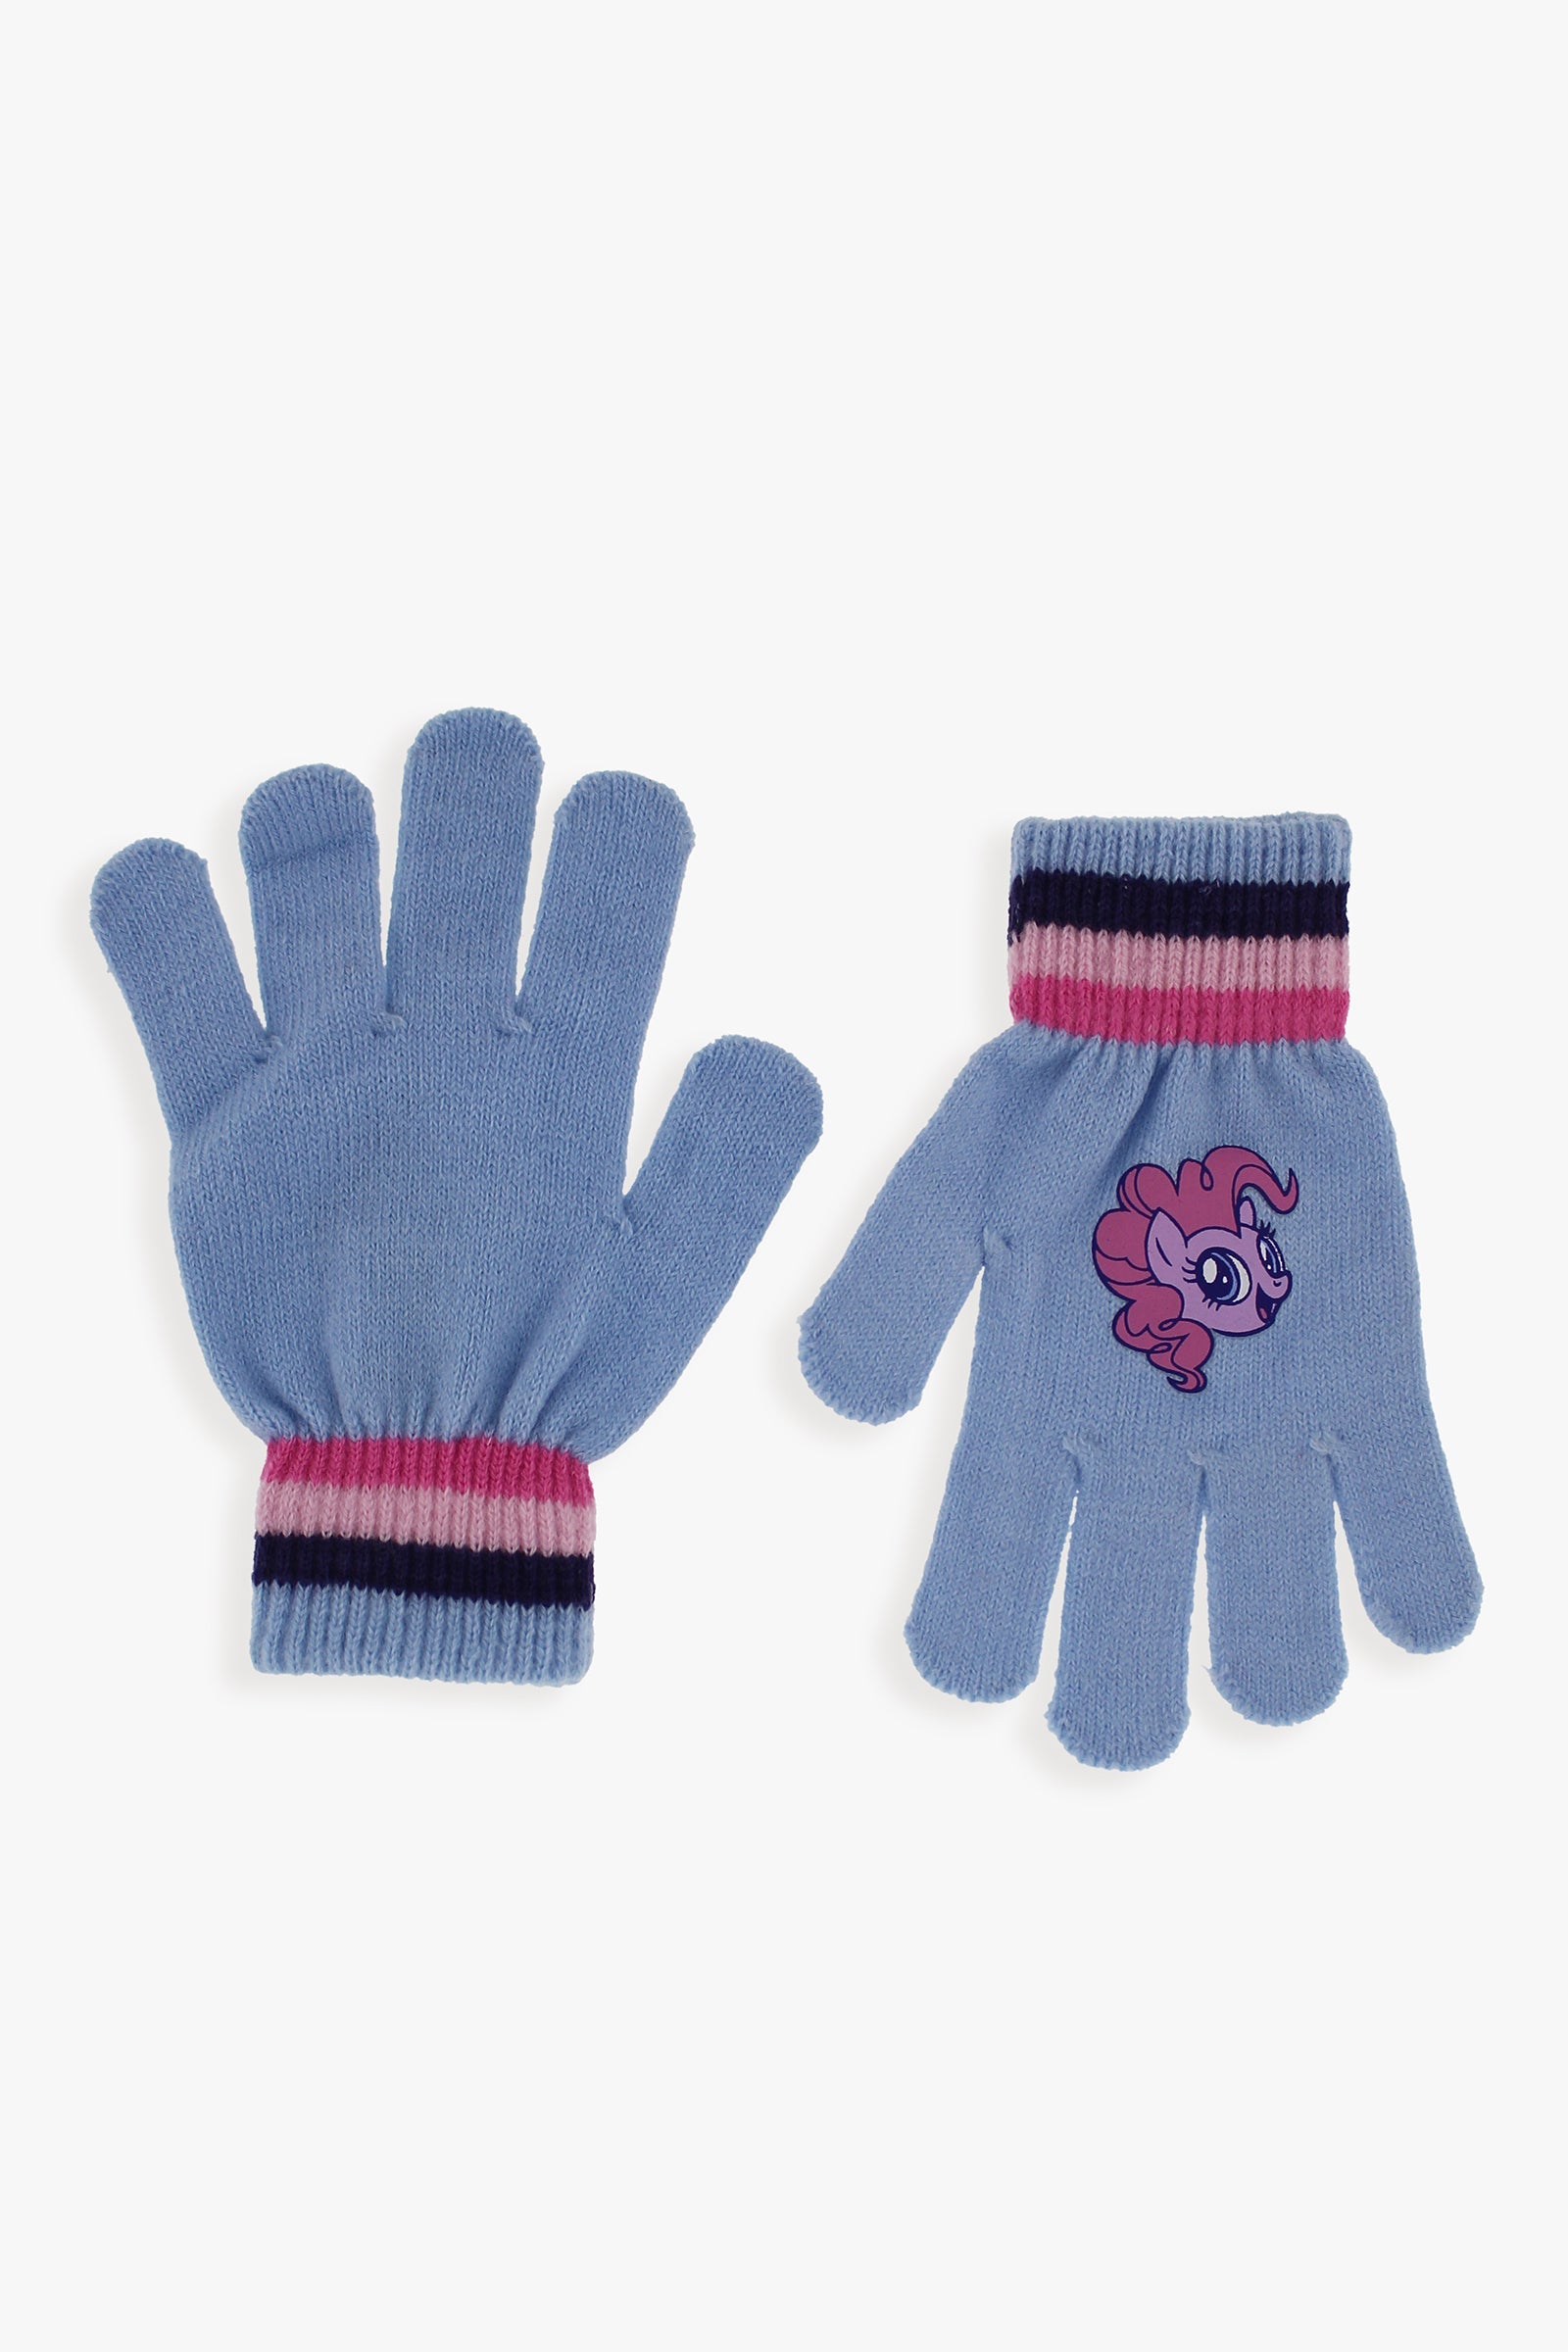 Gertex My Little Pony Youth Girls Knit Winter Gloves | Kids 4-6X